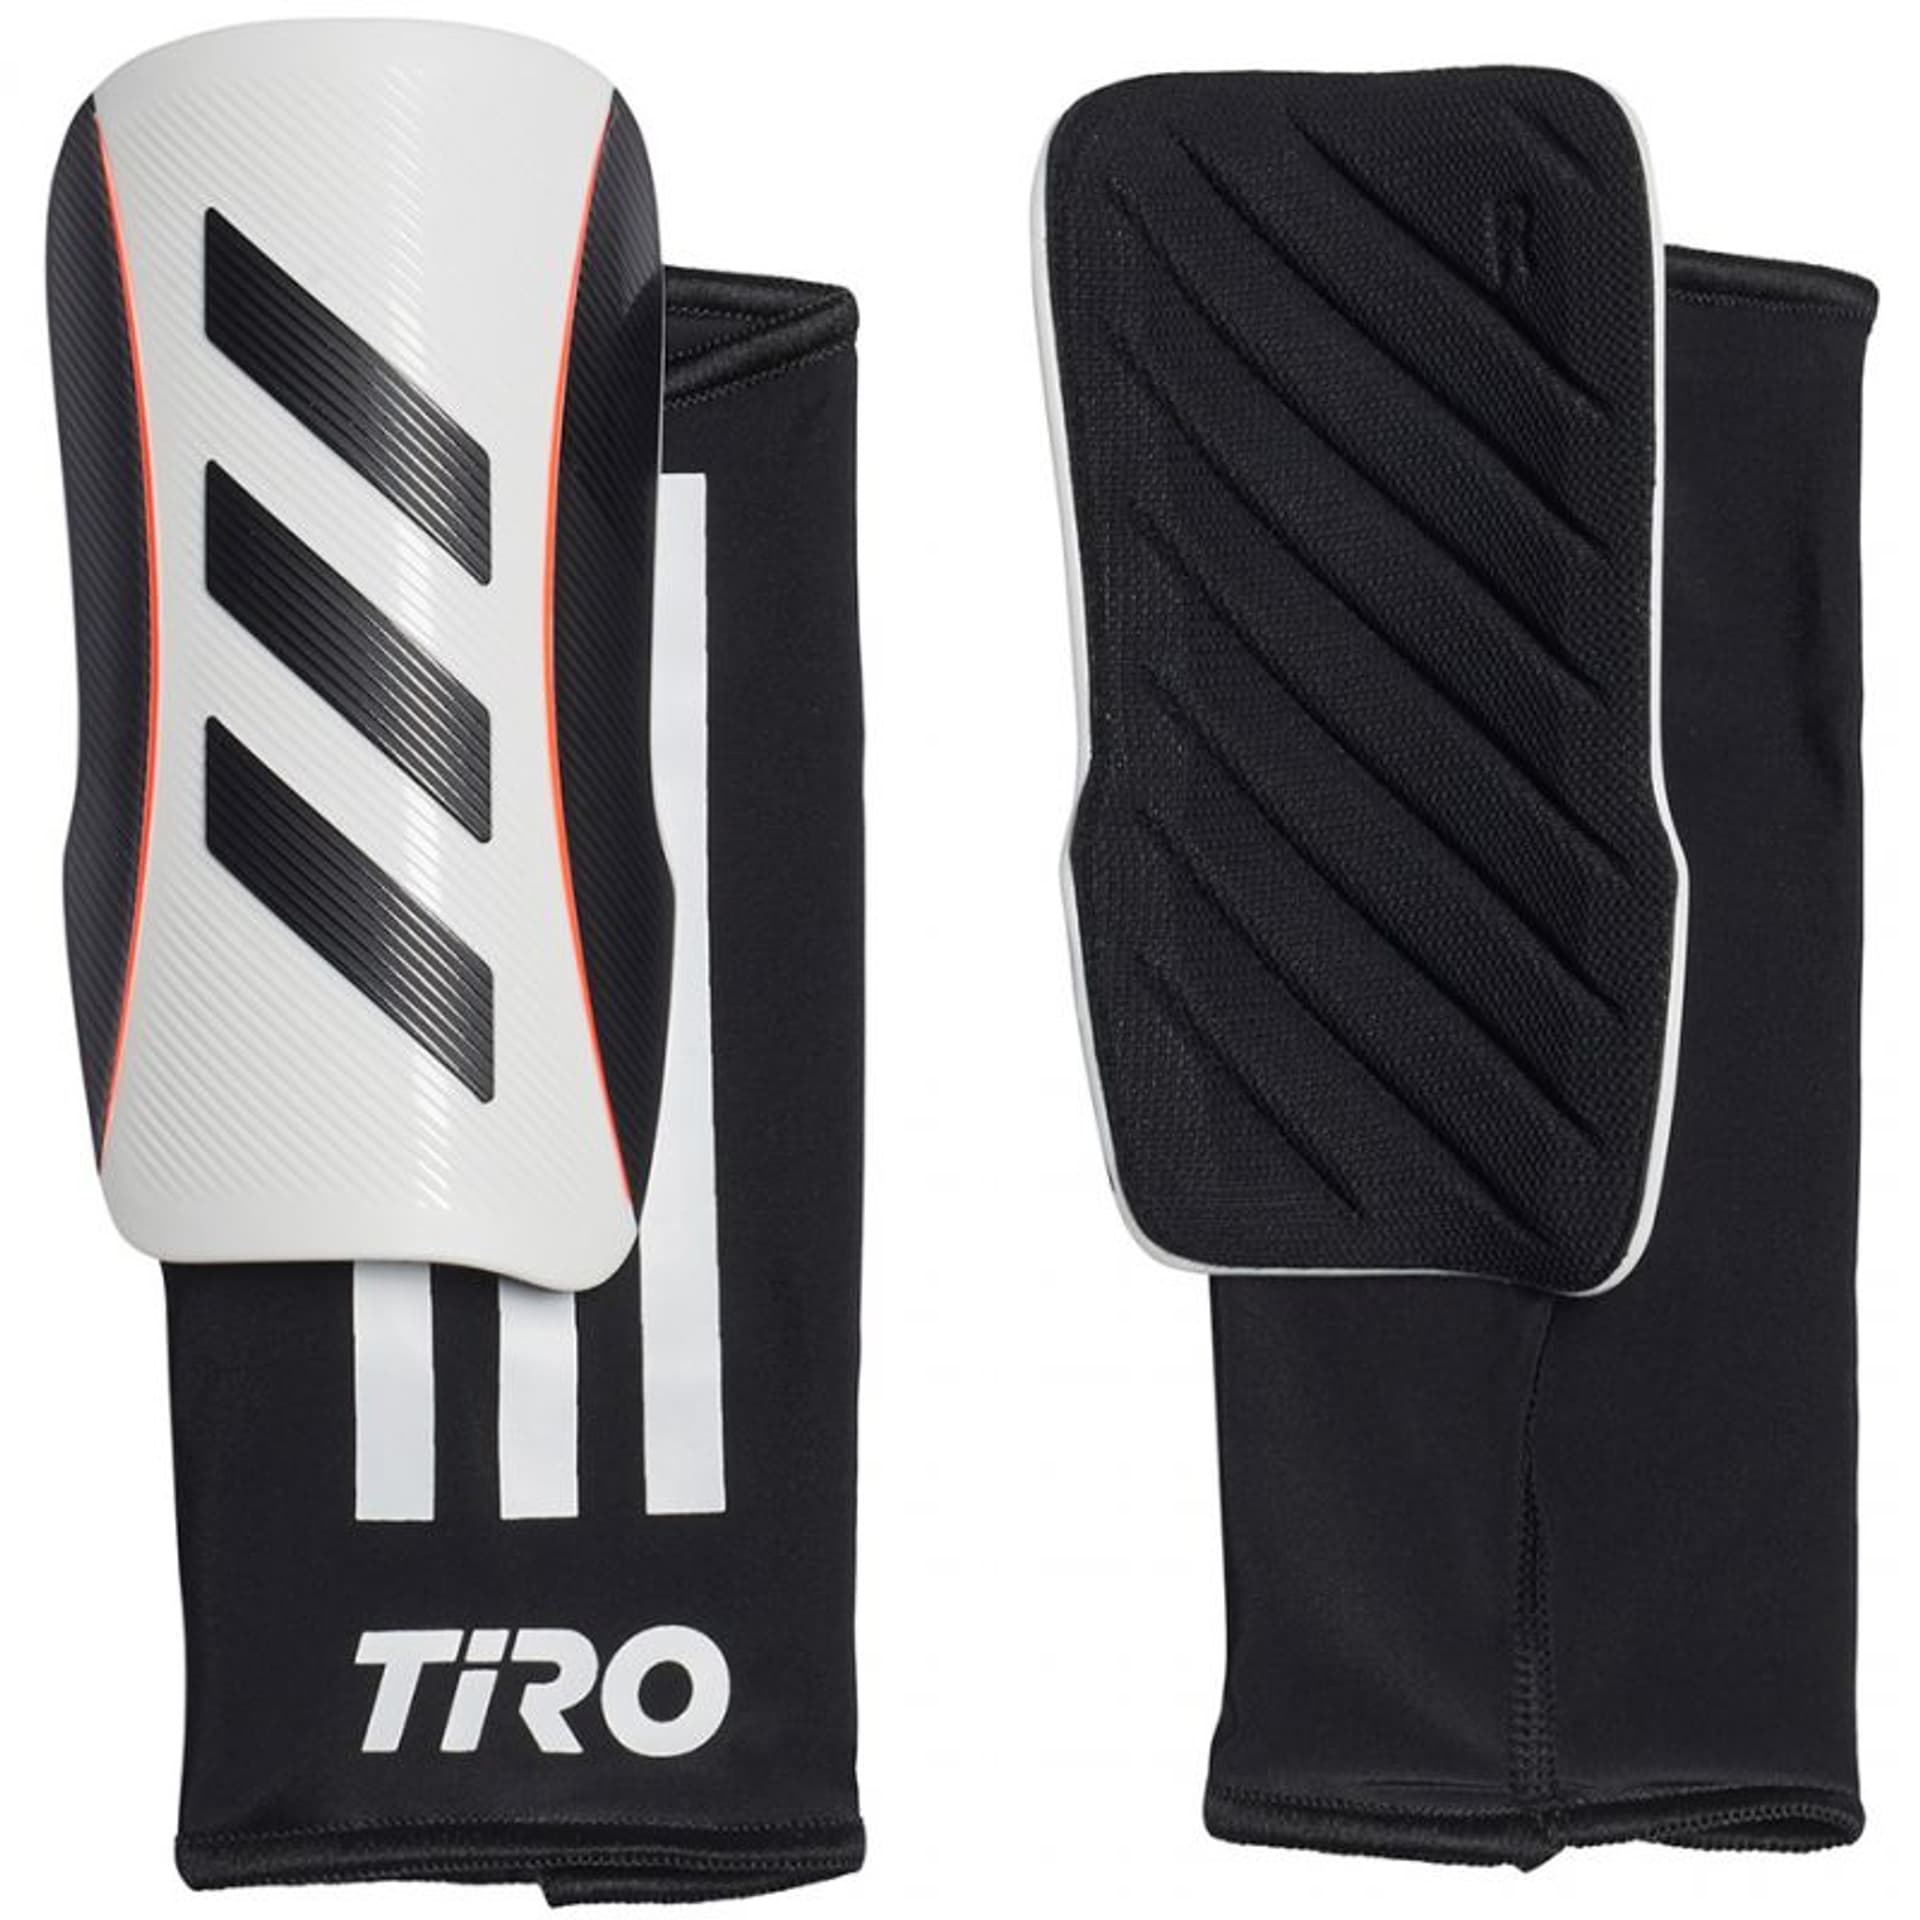 Adidas, Nagolenniki, Tiro SG LGE GK3534, biało-czarny, rozmiar XL